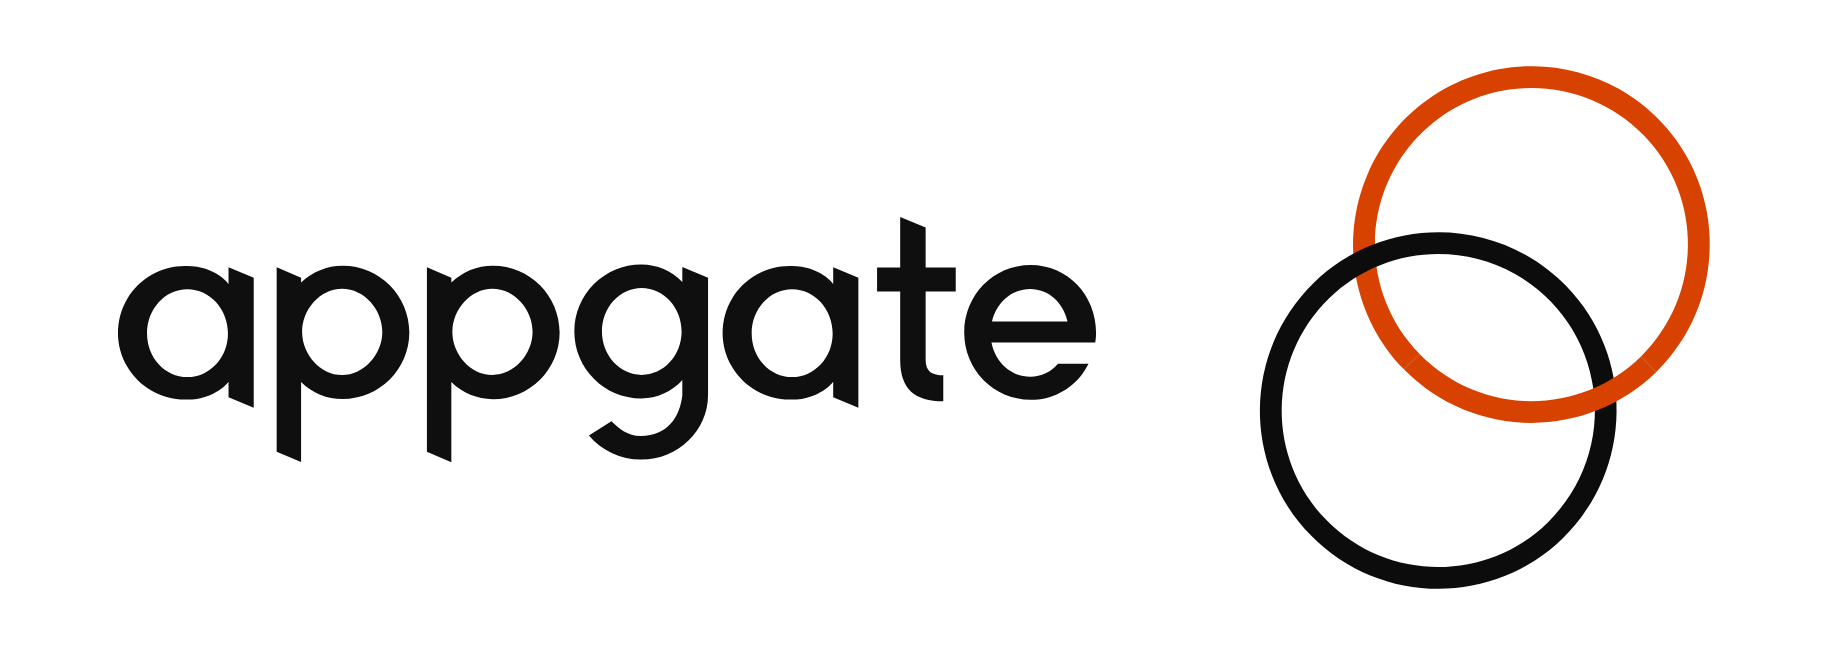 appgate-3mcyber